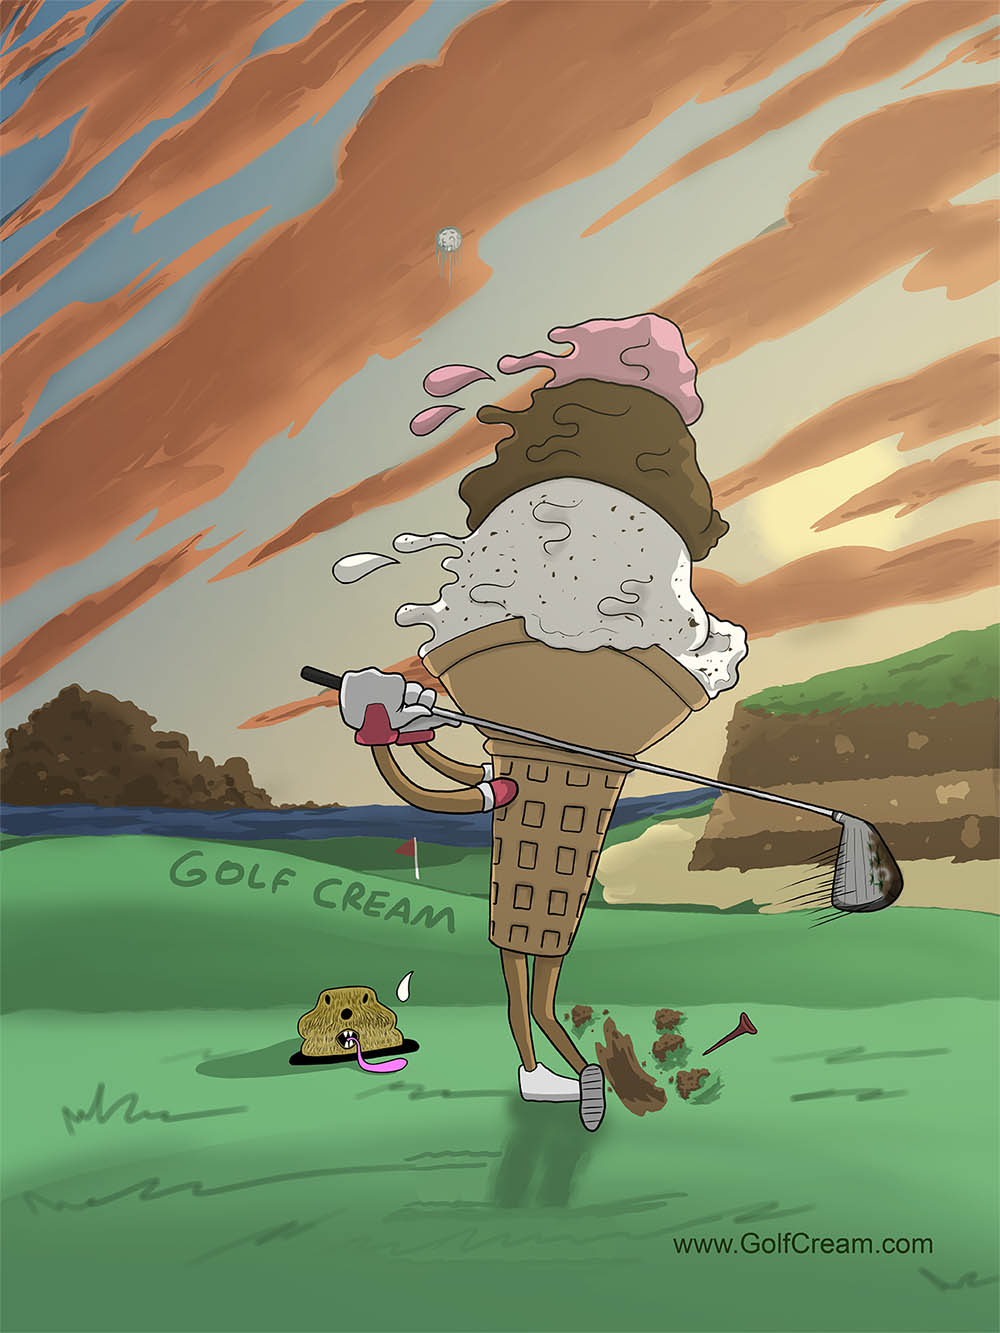 Golf-cream-lennard-james-05